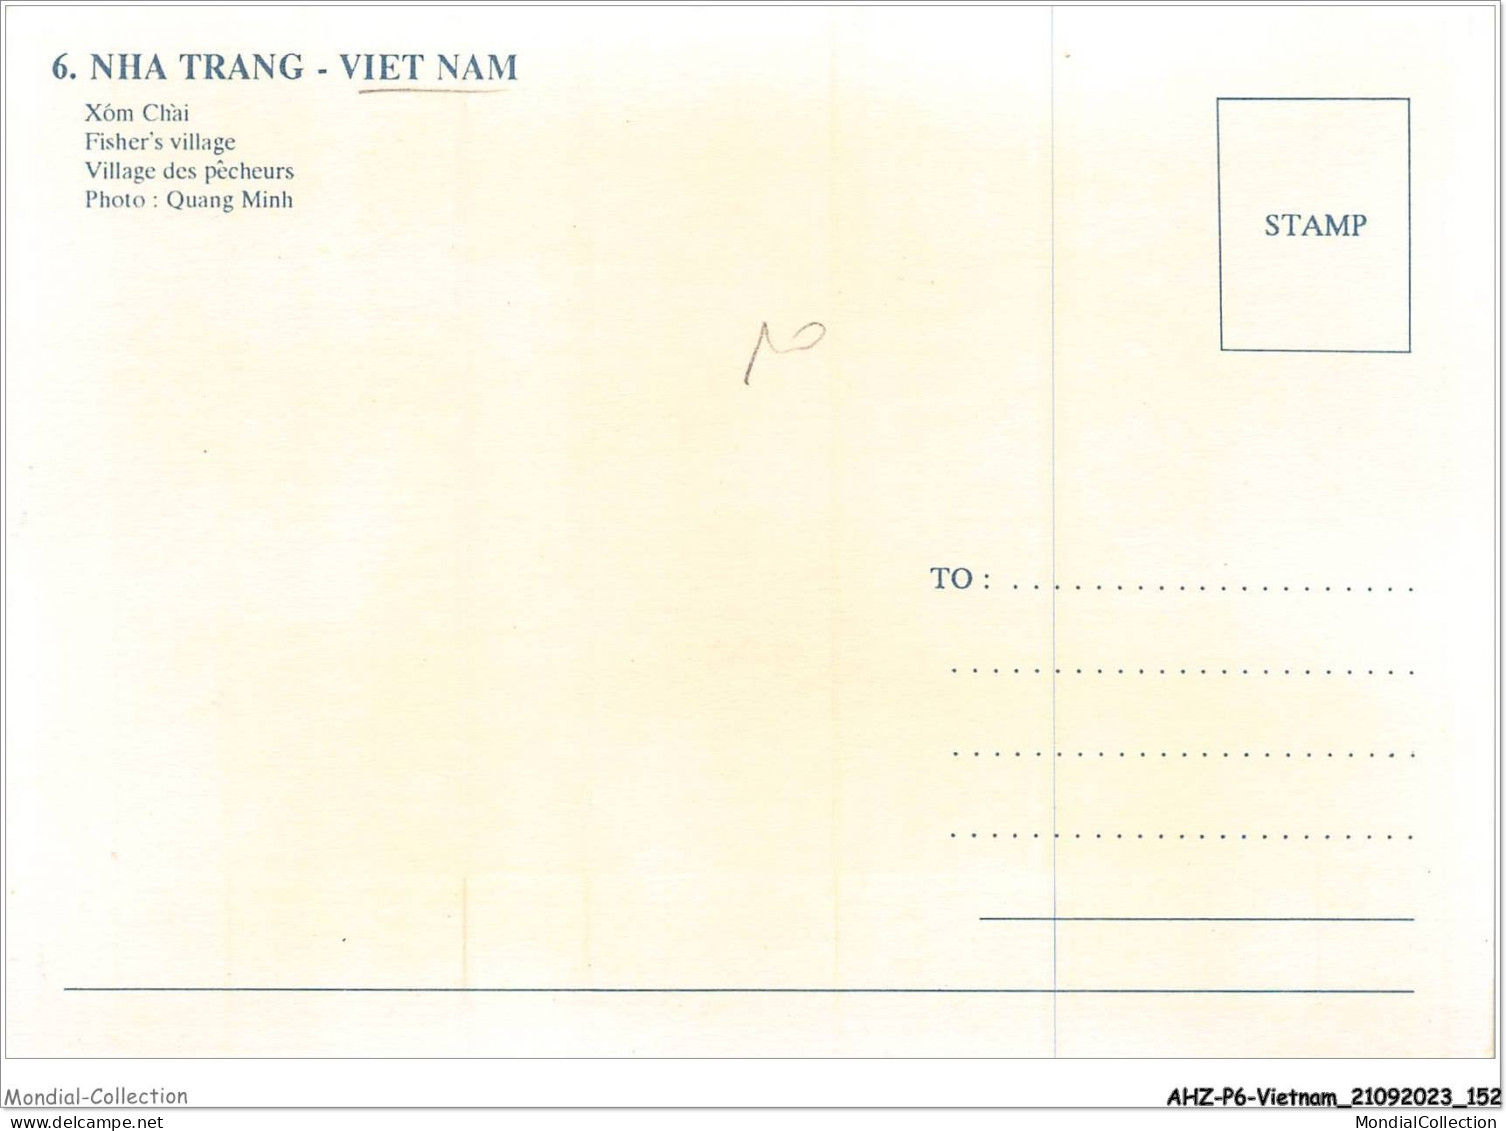 AHZP6-VIETNAM-0575 - NAH TRANG - VIET NAM - VILLAGE DES PECHEURS - Vietnam